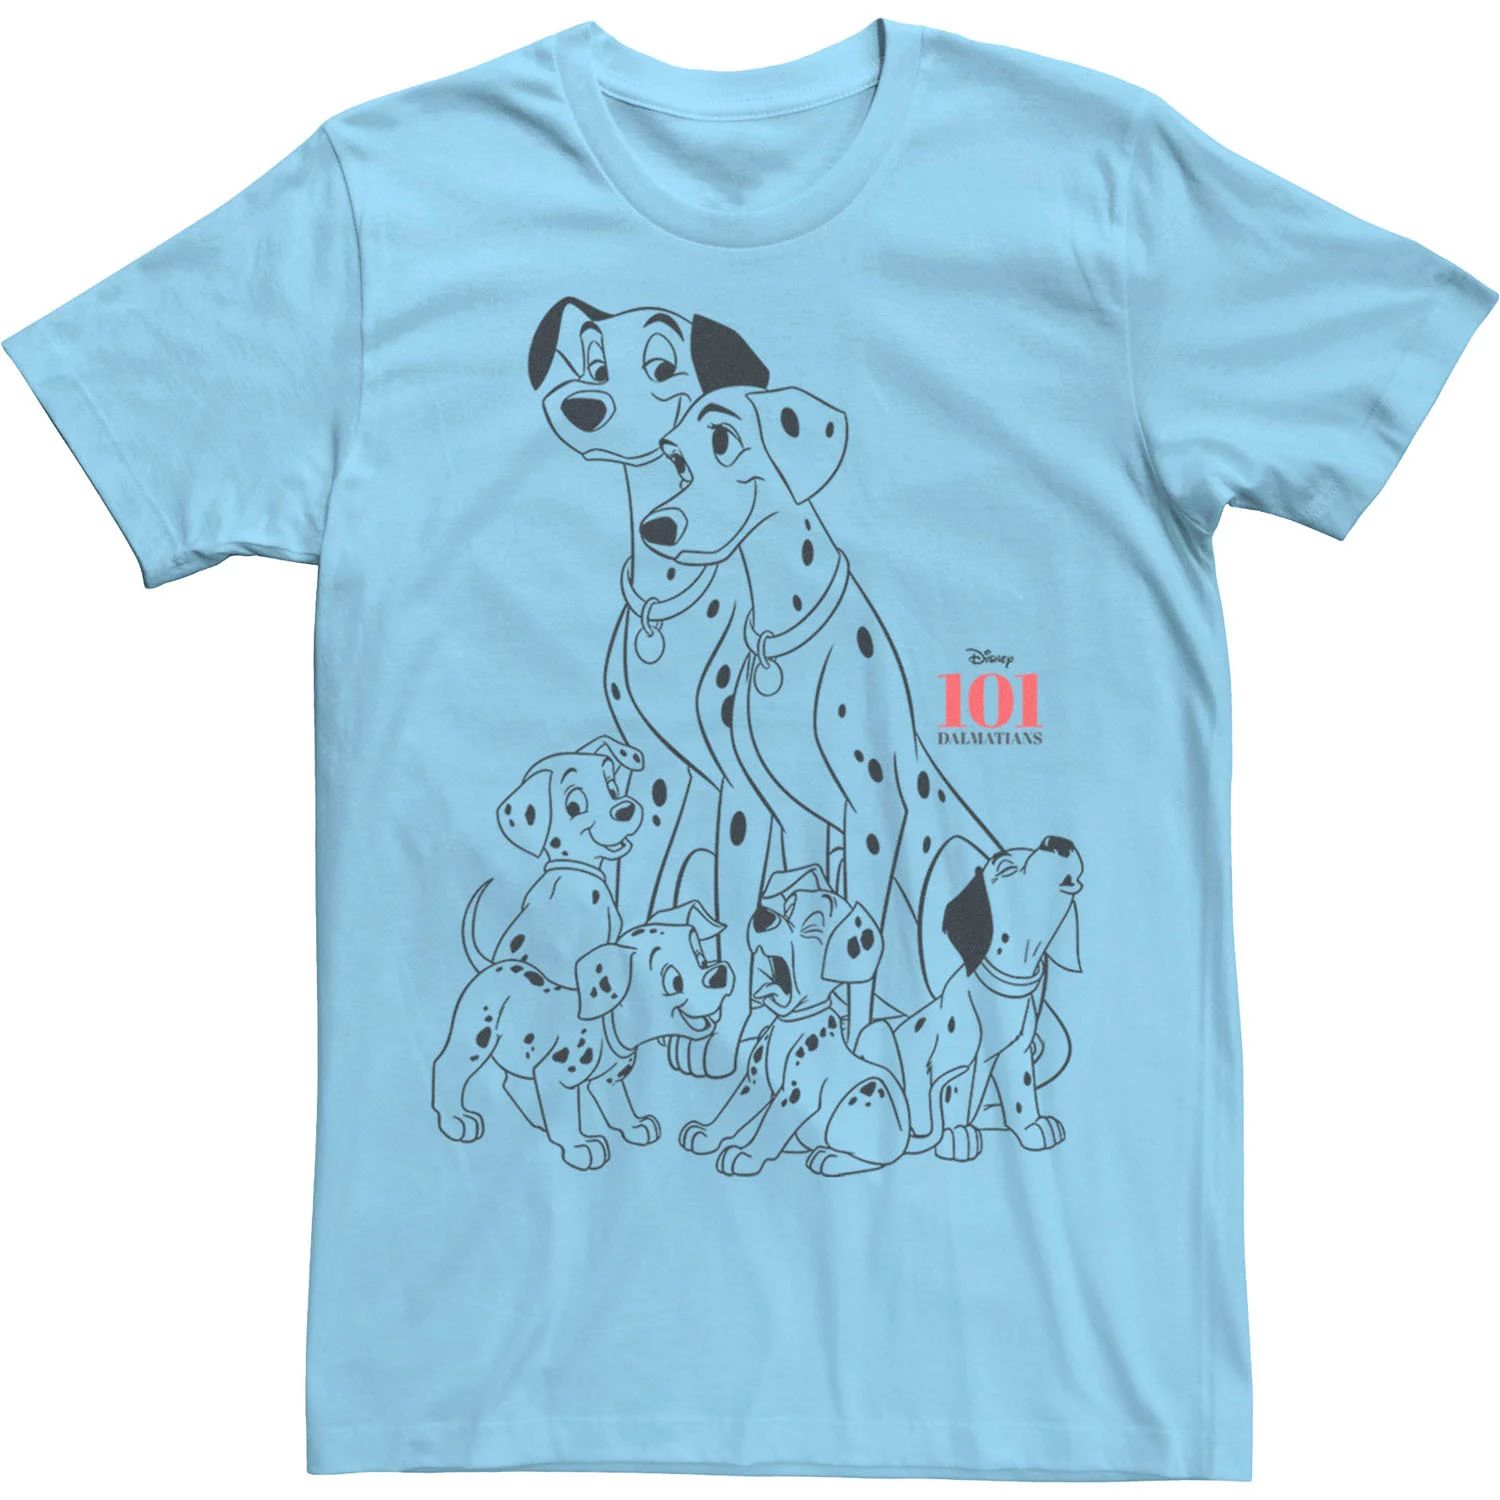 Мужская футболка Disney 101 далматинец Family Group Shot Licensed Character, светло-синий мужская футболка собака далматинец m синий